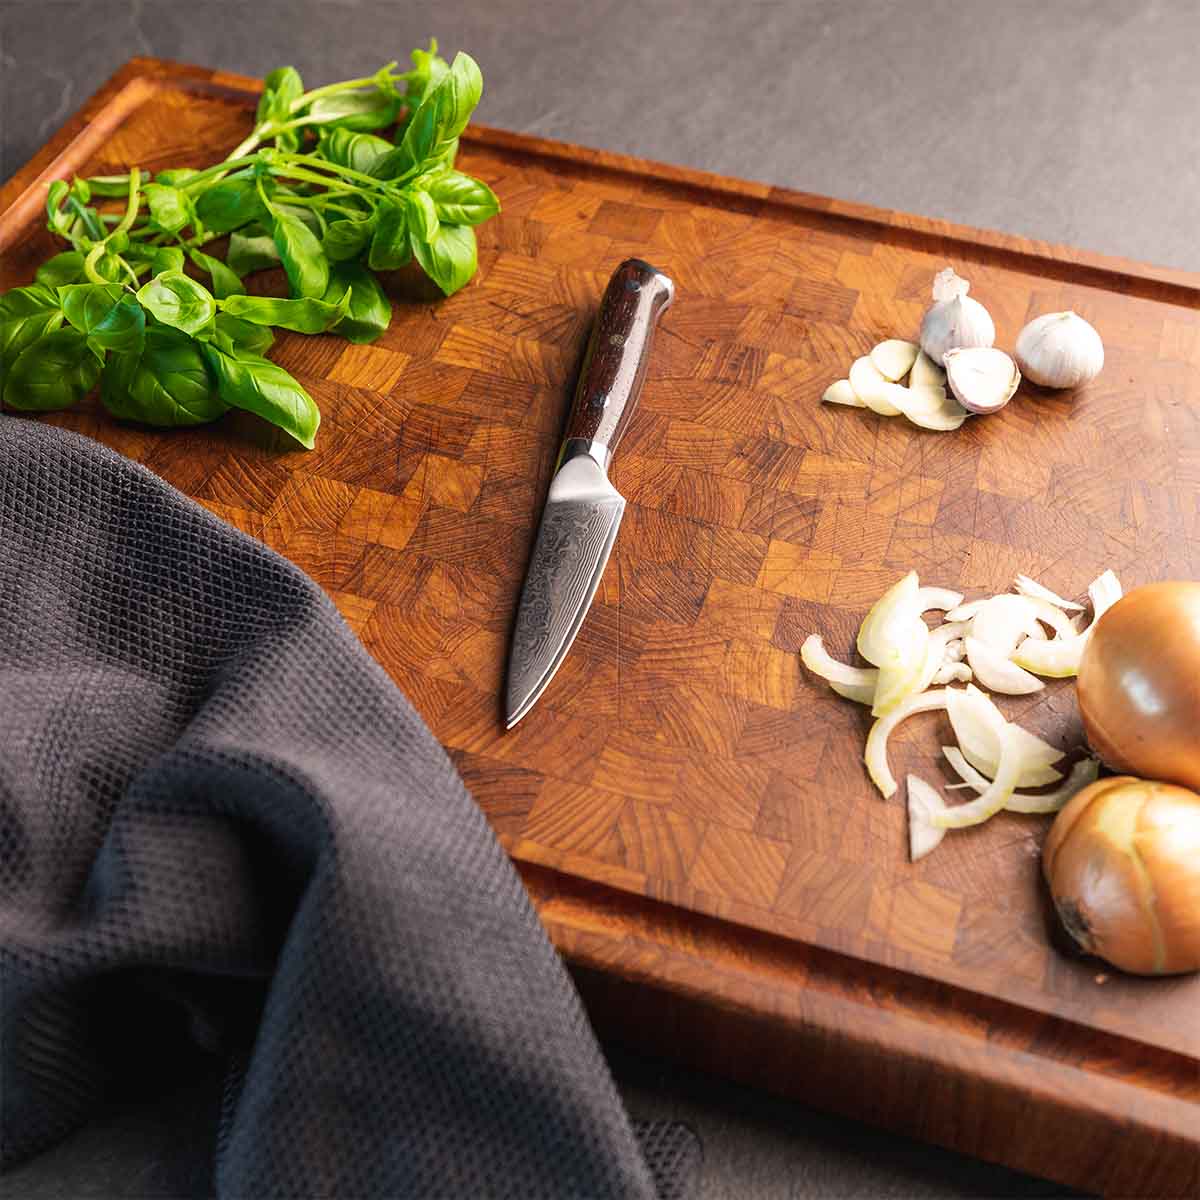 North Urtekniv 90 mm. - Kitchen Knives - cuisinelab